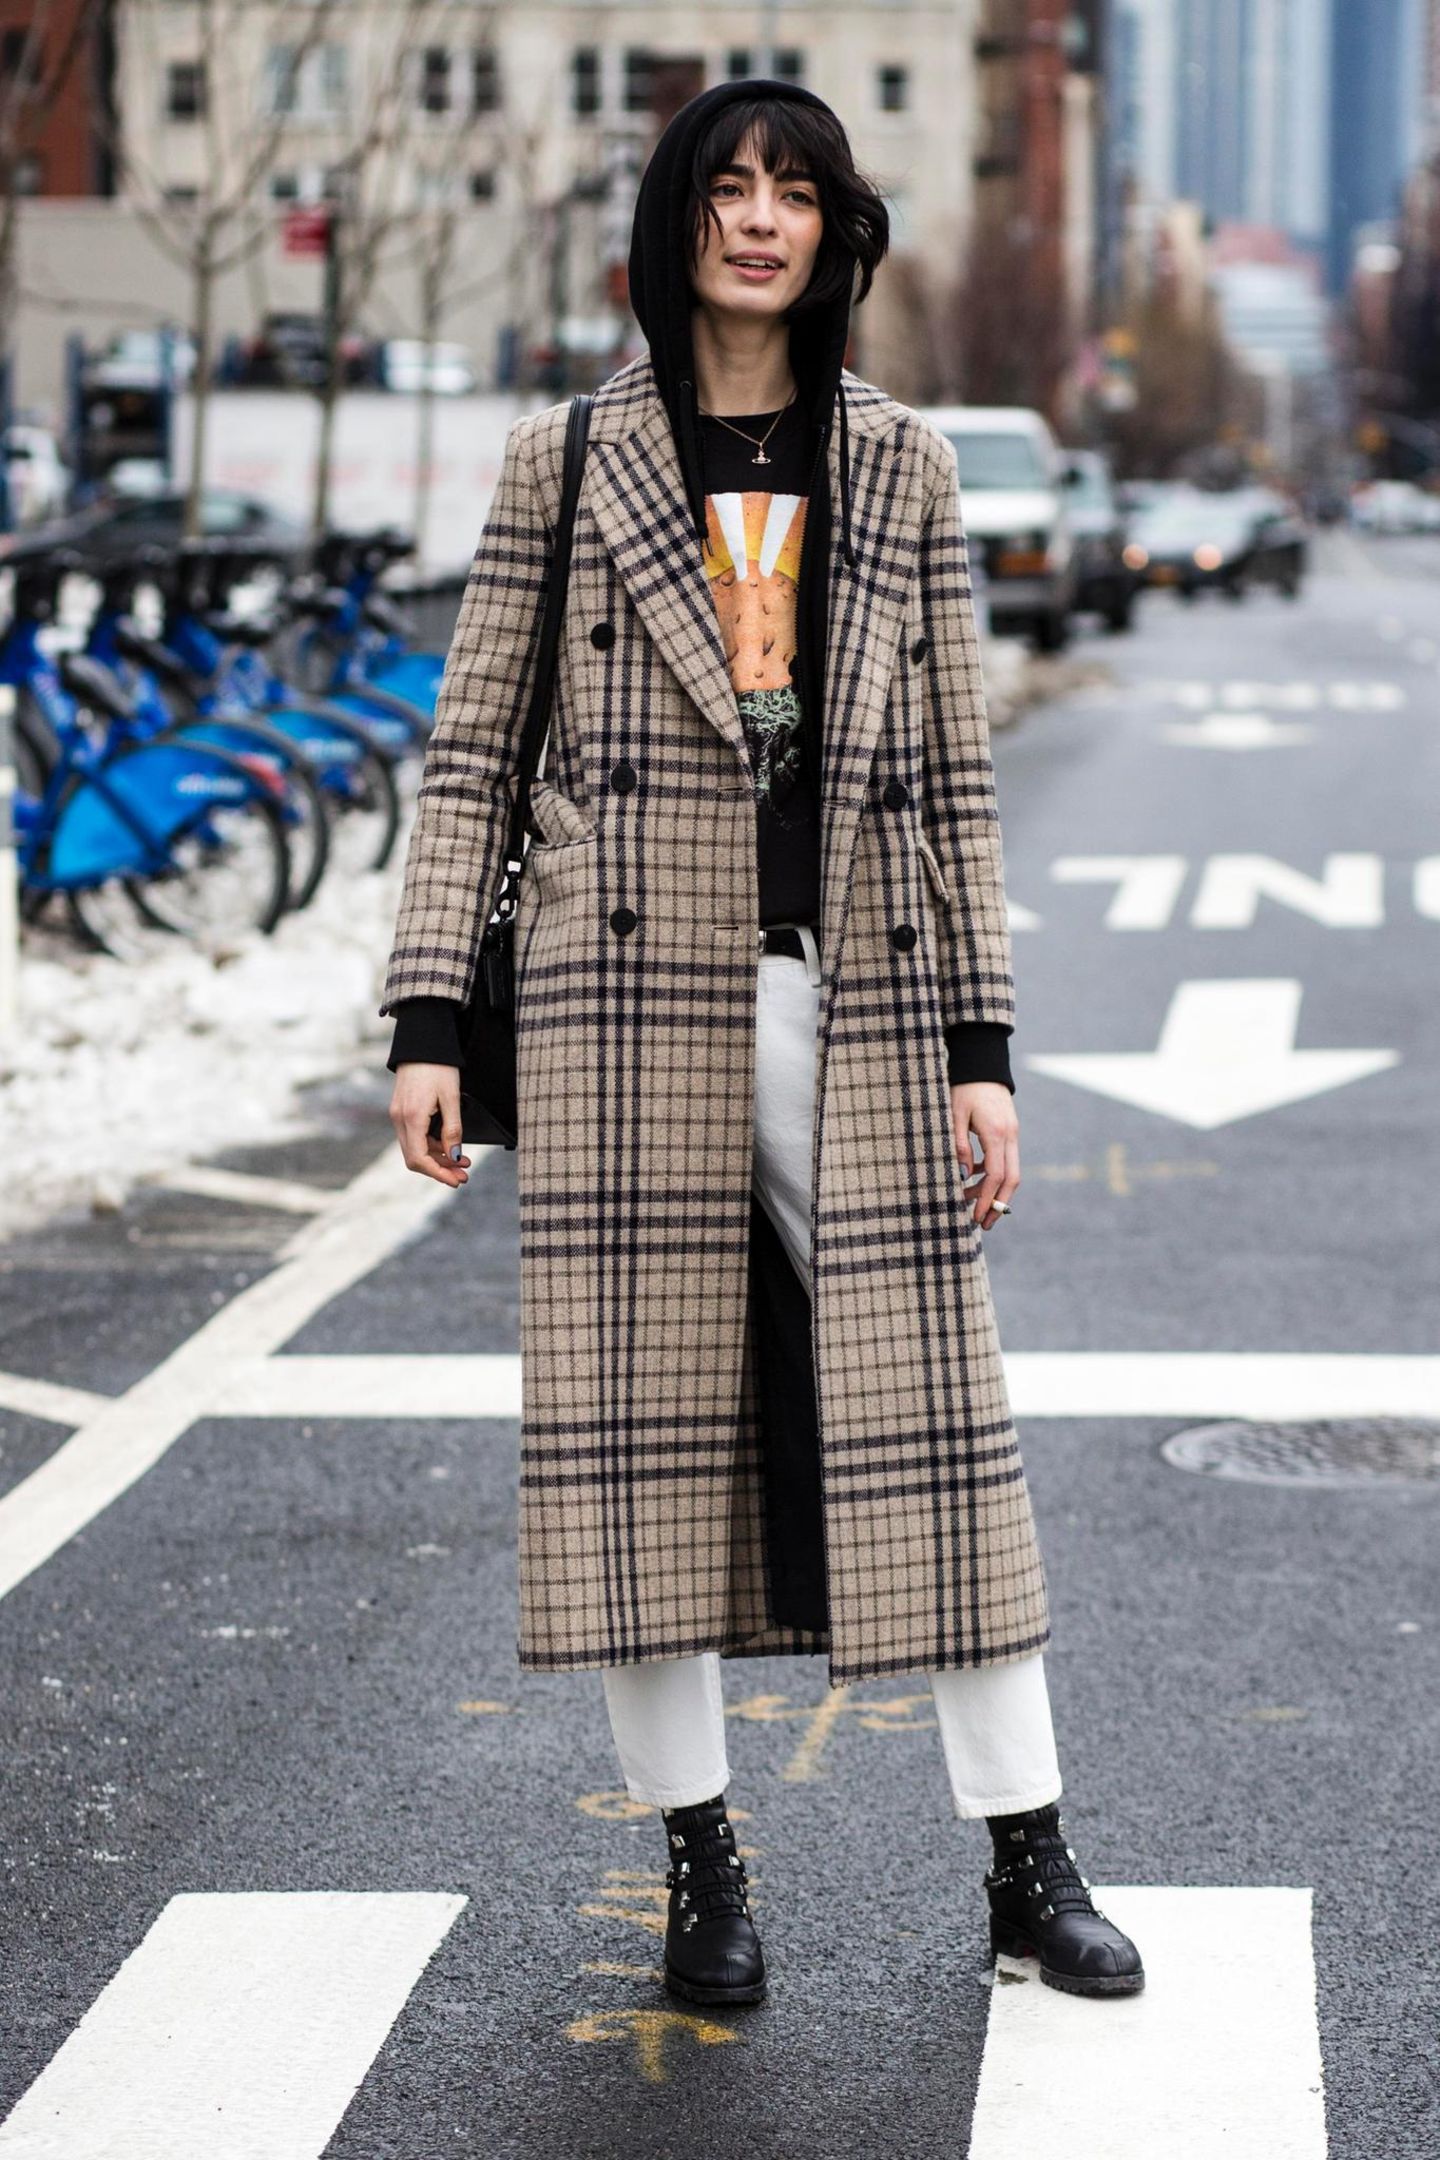 Bloggerin trägt Oversize-Mantel mit Karomuster